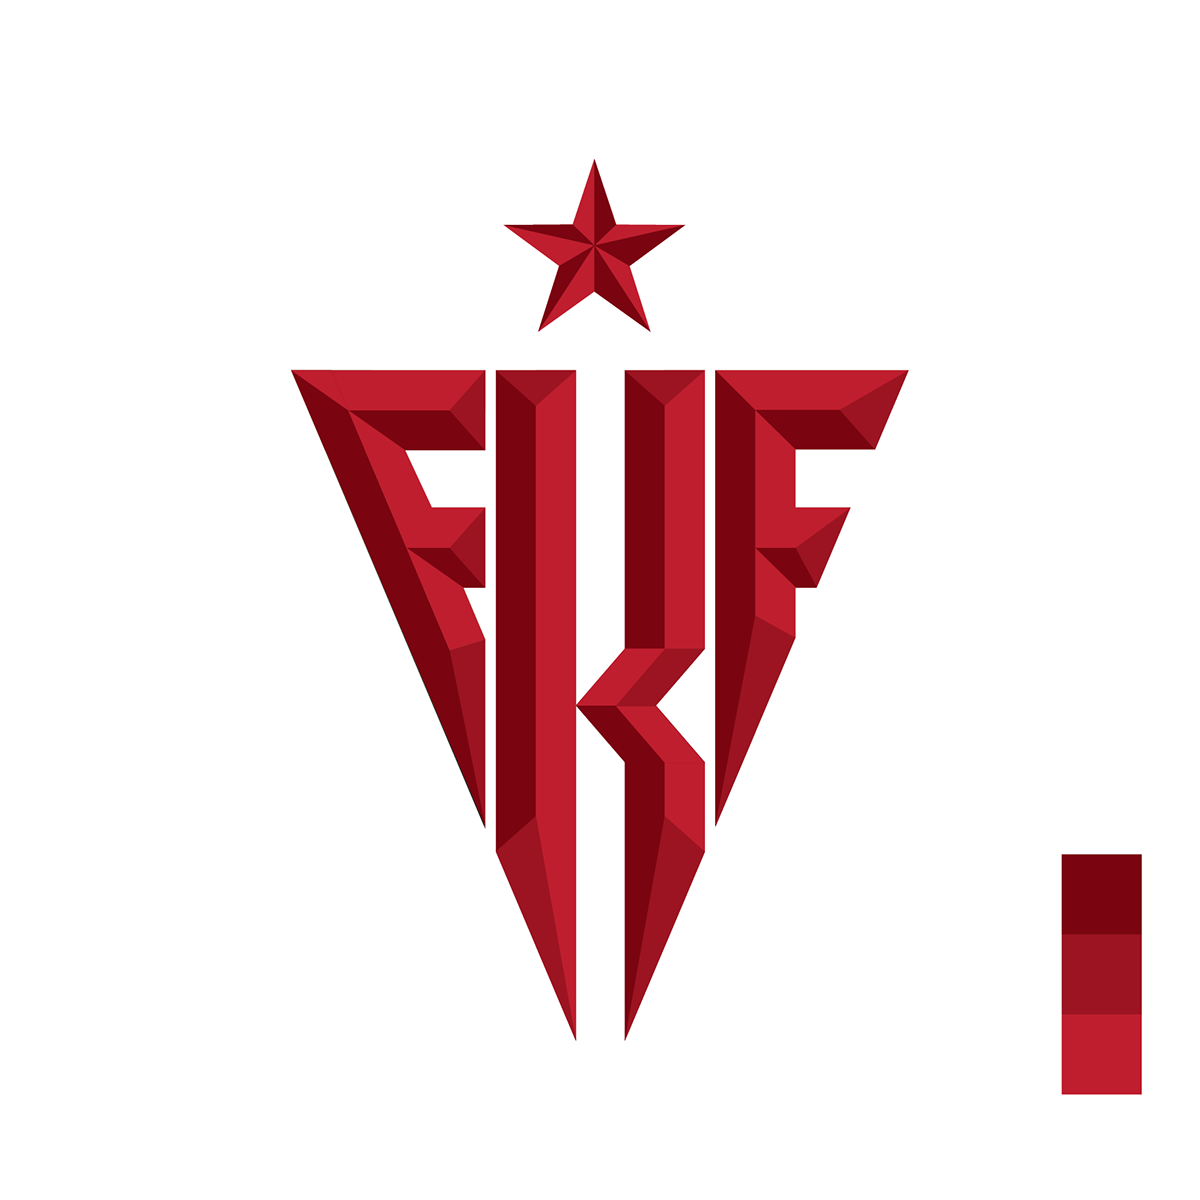 FKF fikir kulupleri federasyonu socialism logo red bronze revolution öğrenci hareketleri students movement star triangle geometric